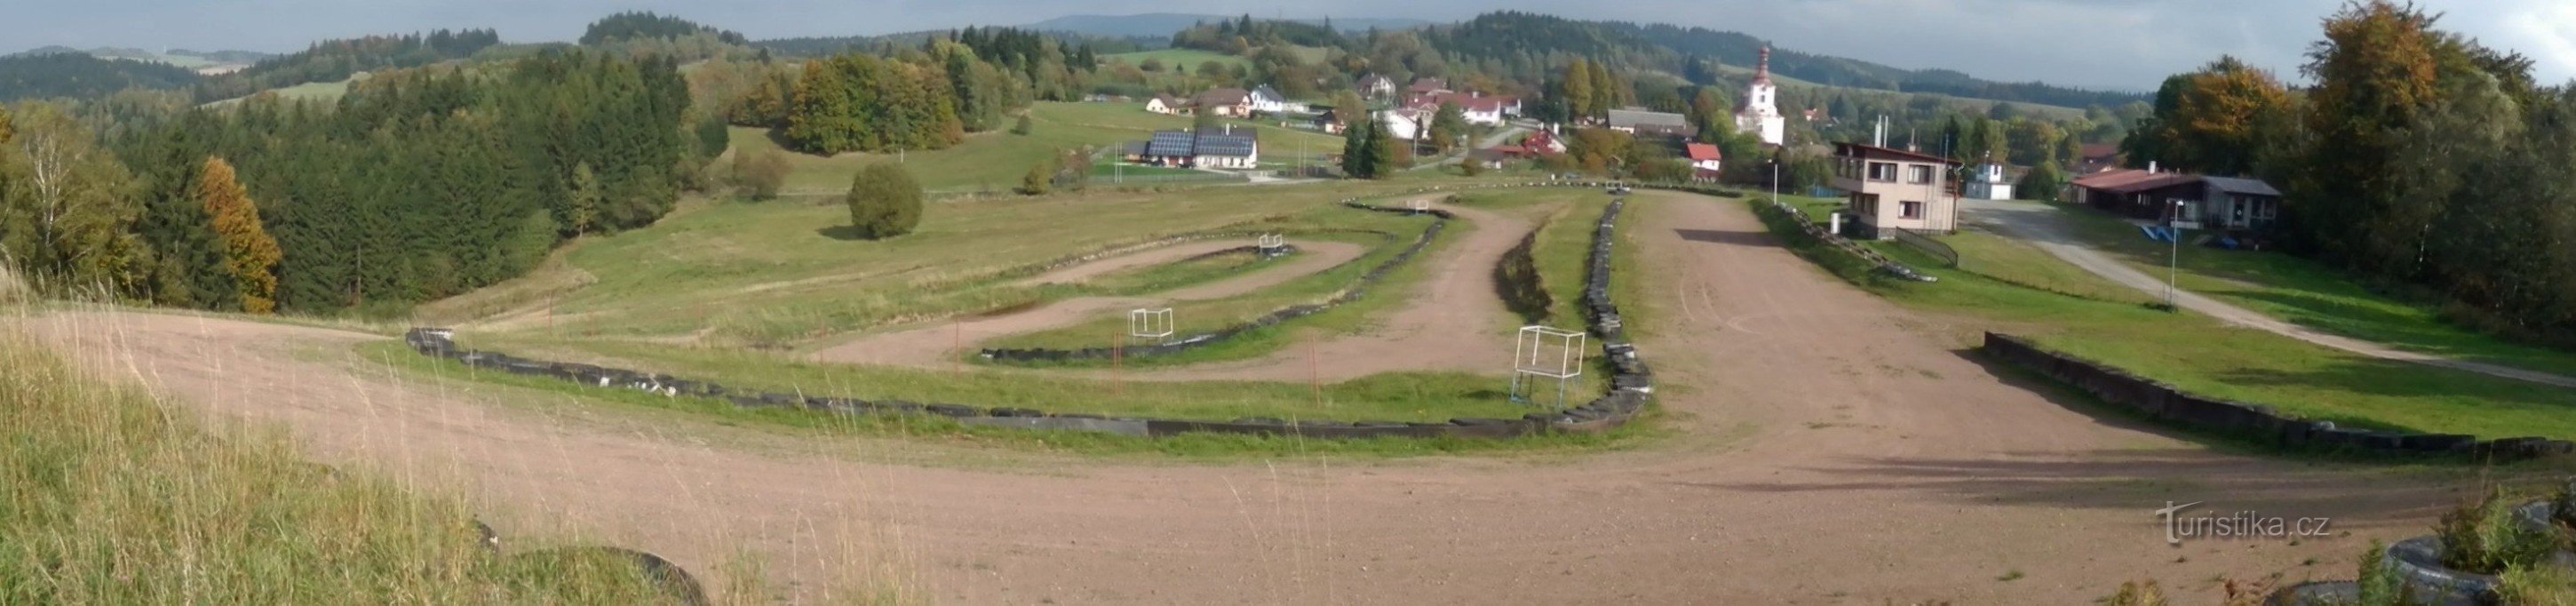 Vedere panoramică a pistei